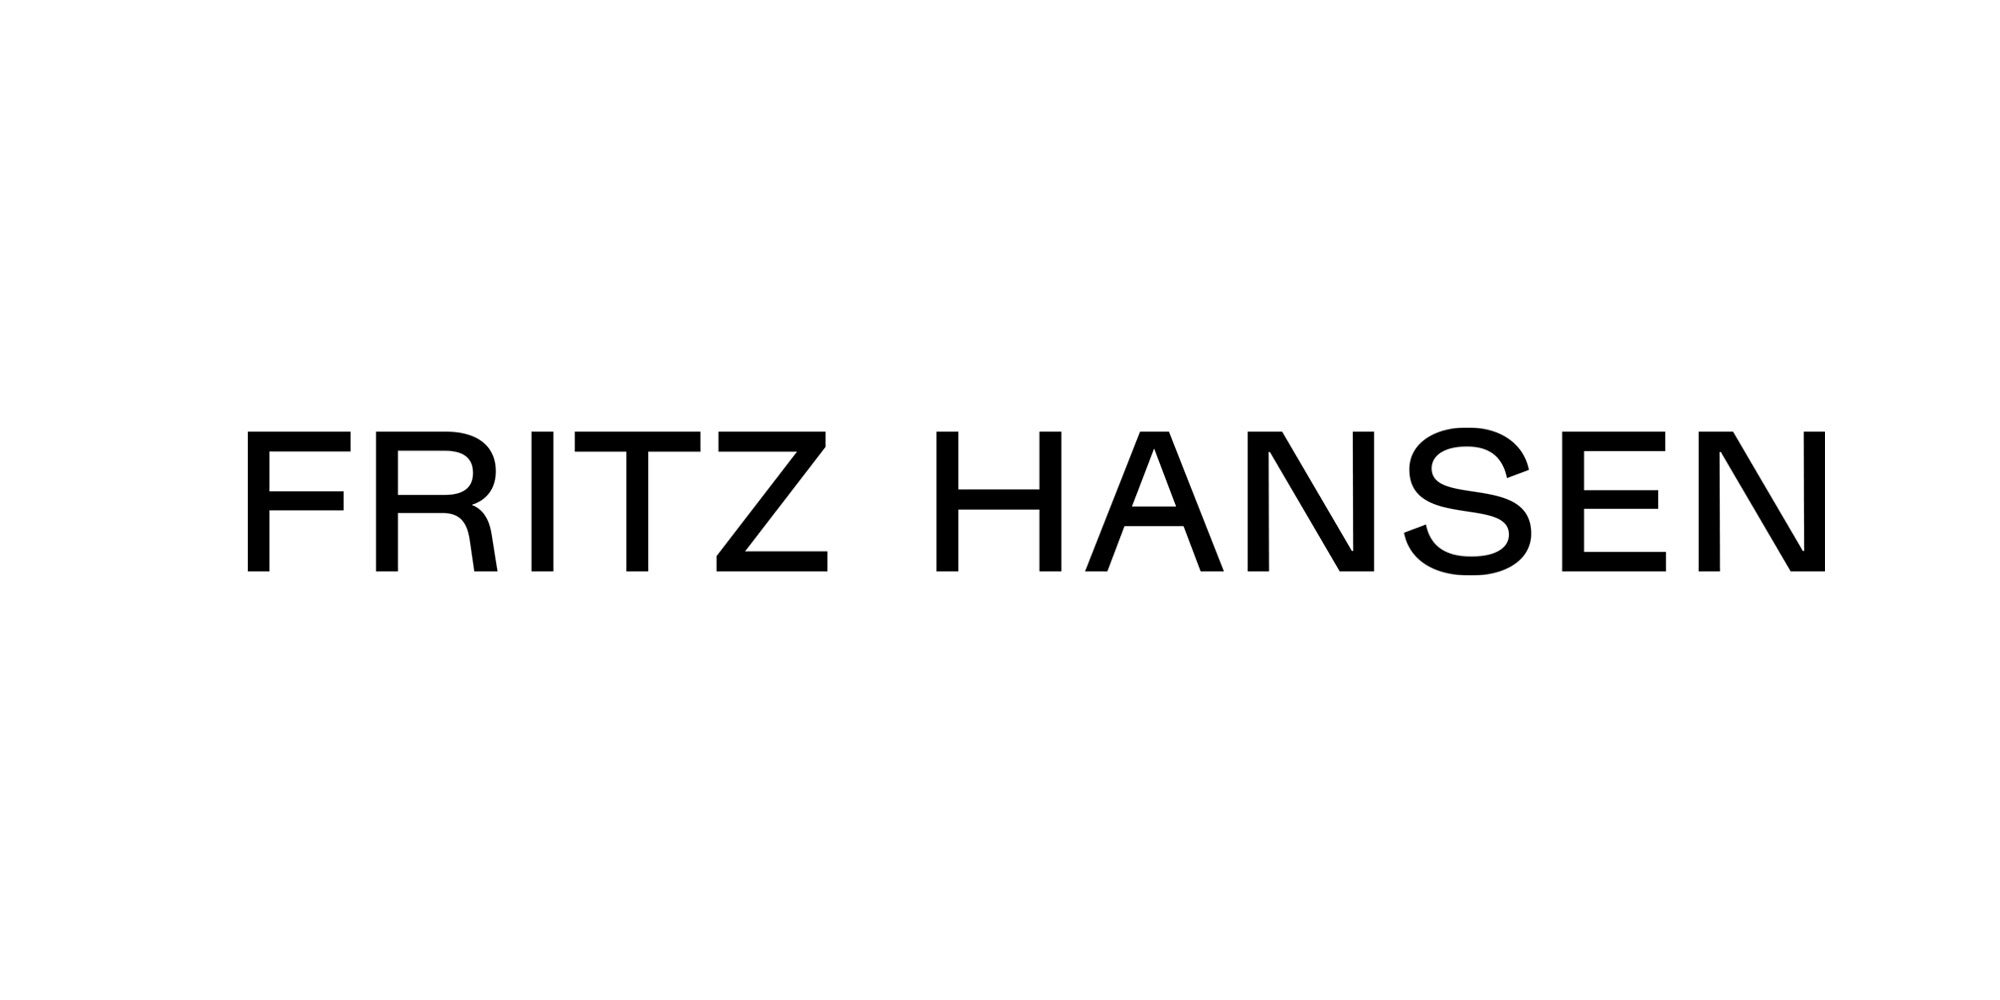 Fritz hansen disponible chez Sole e Ombra